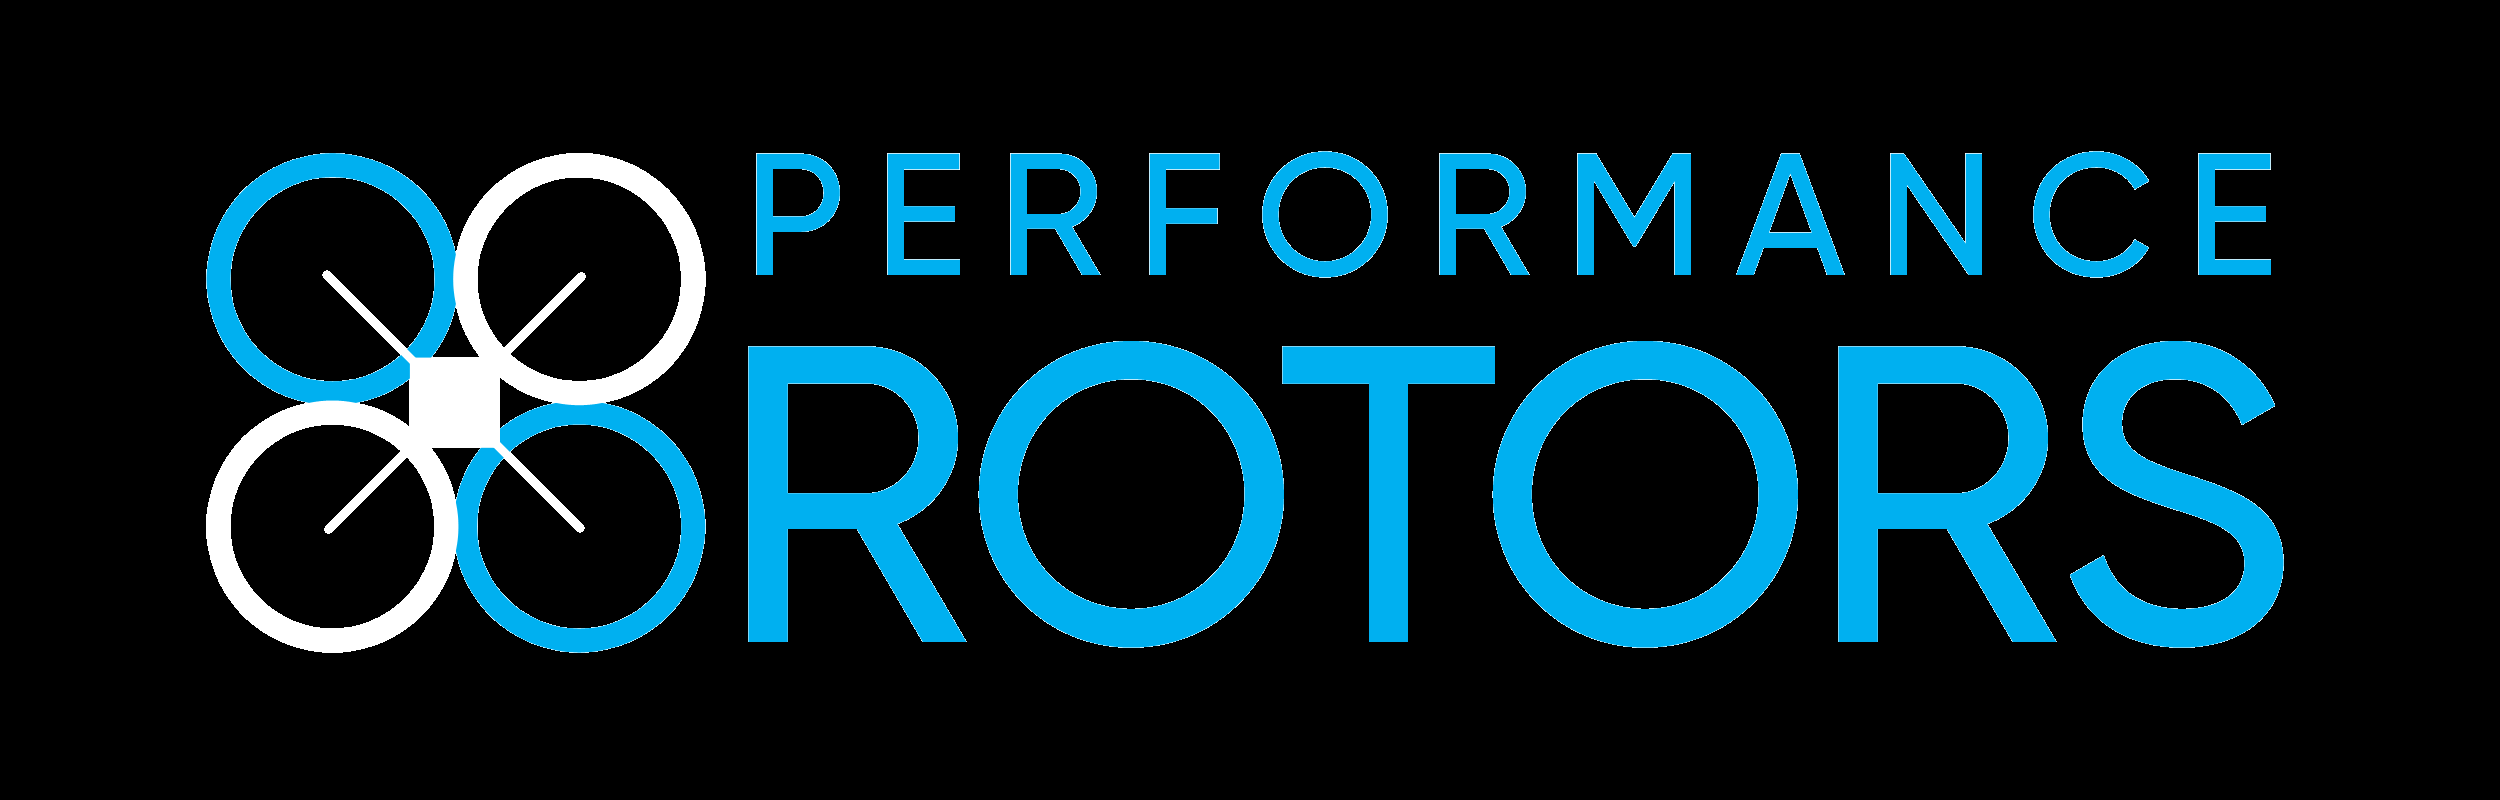 Performance Rotors